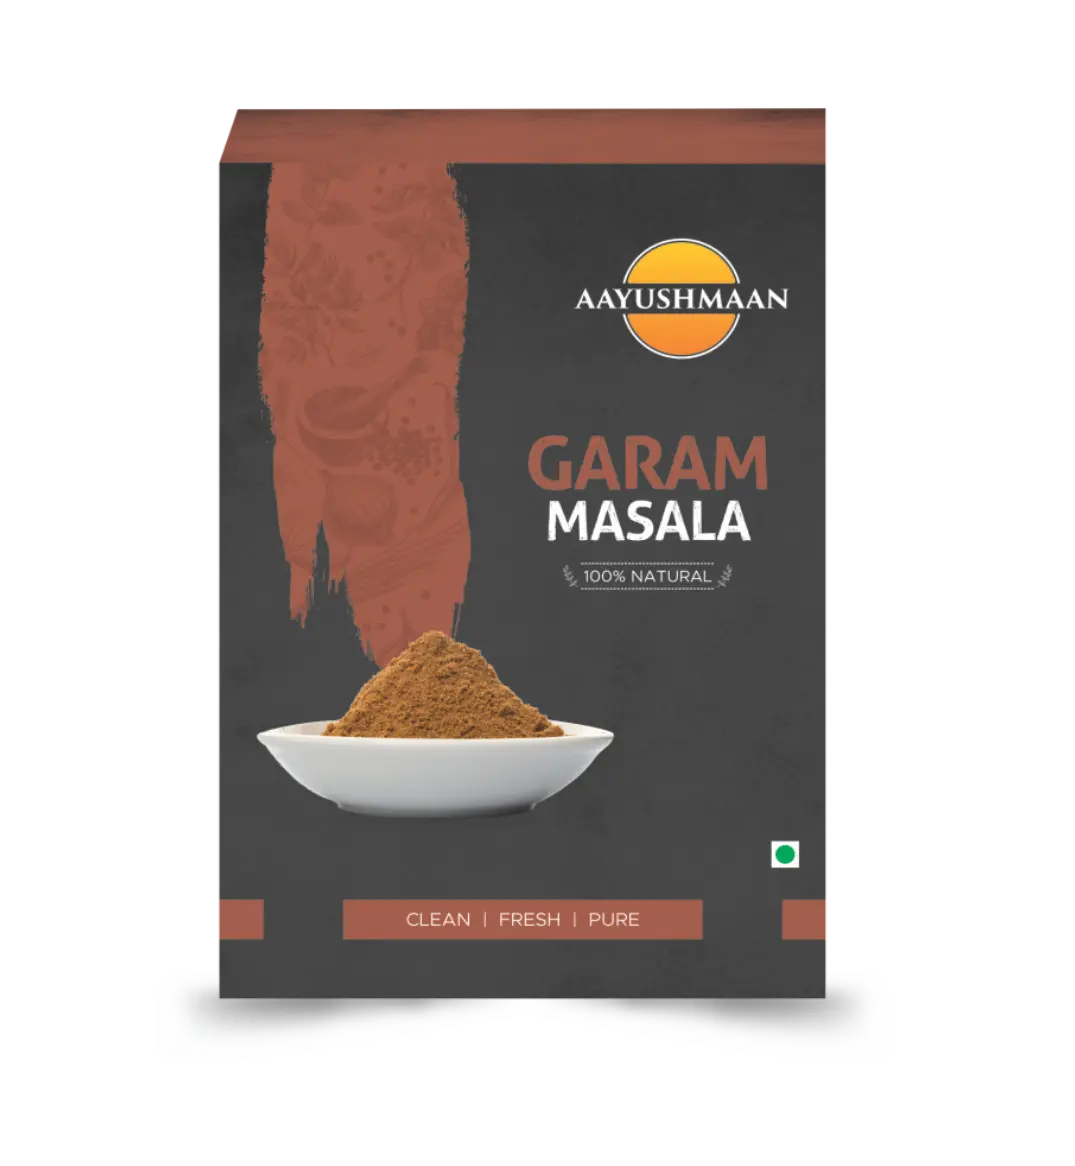 Aayushmaan Garam Masala- a perfect blend of natural ingredients